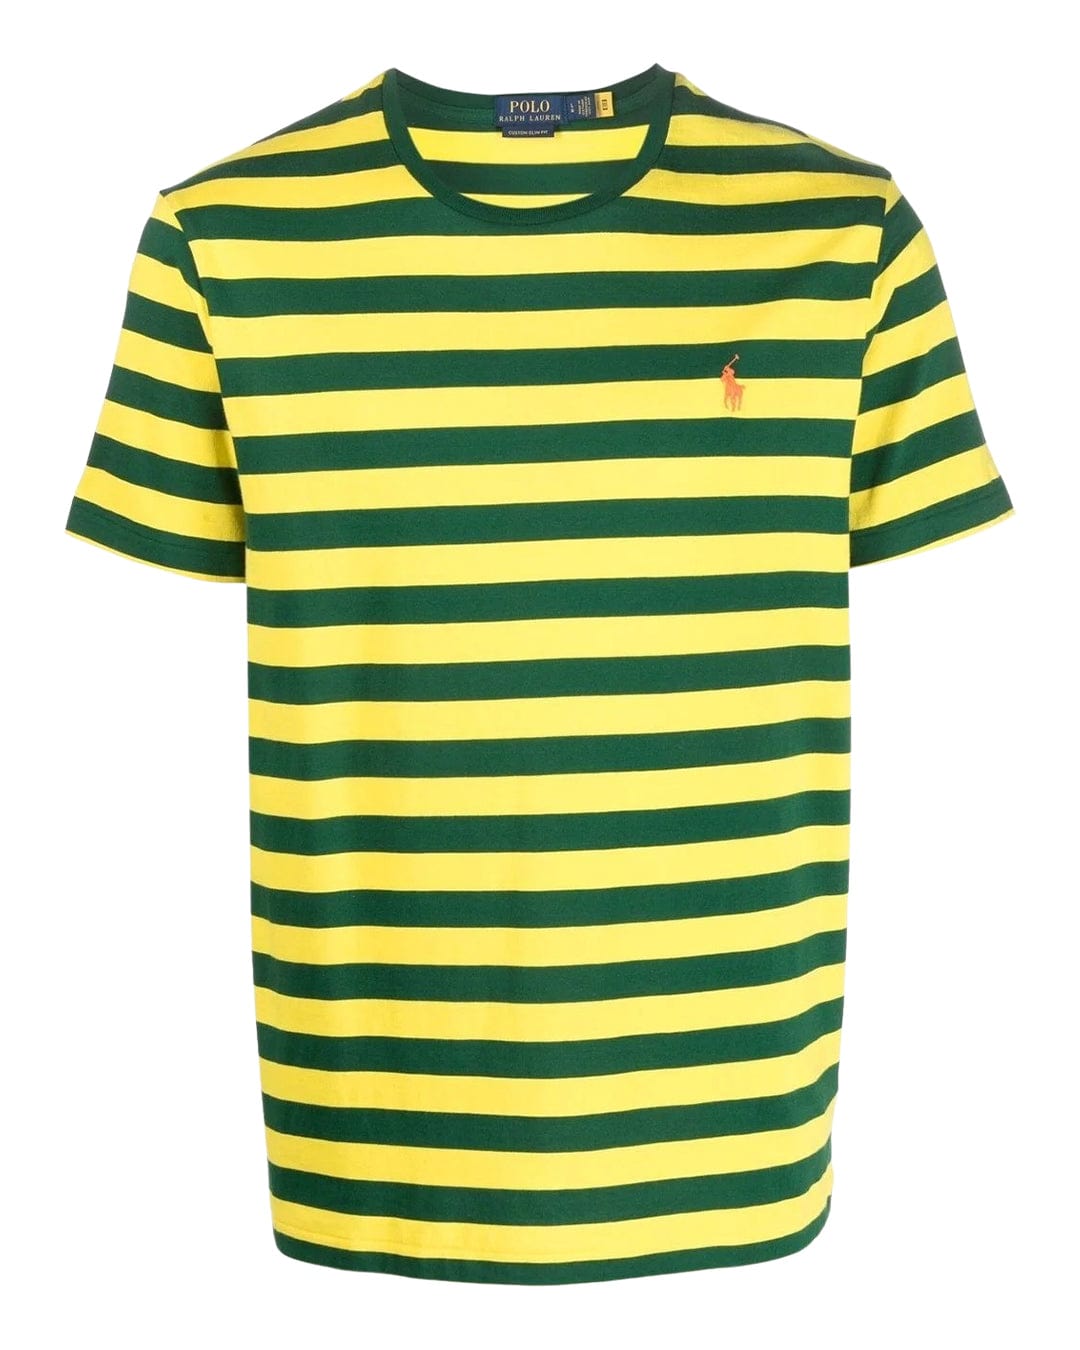 Polo Ralph Lauren T-Shirts Polo Ralph Lauren Double Striped Yellow T-Shirt